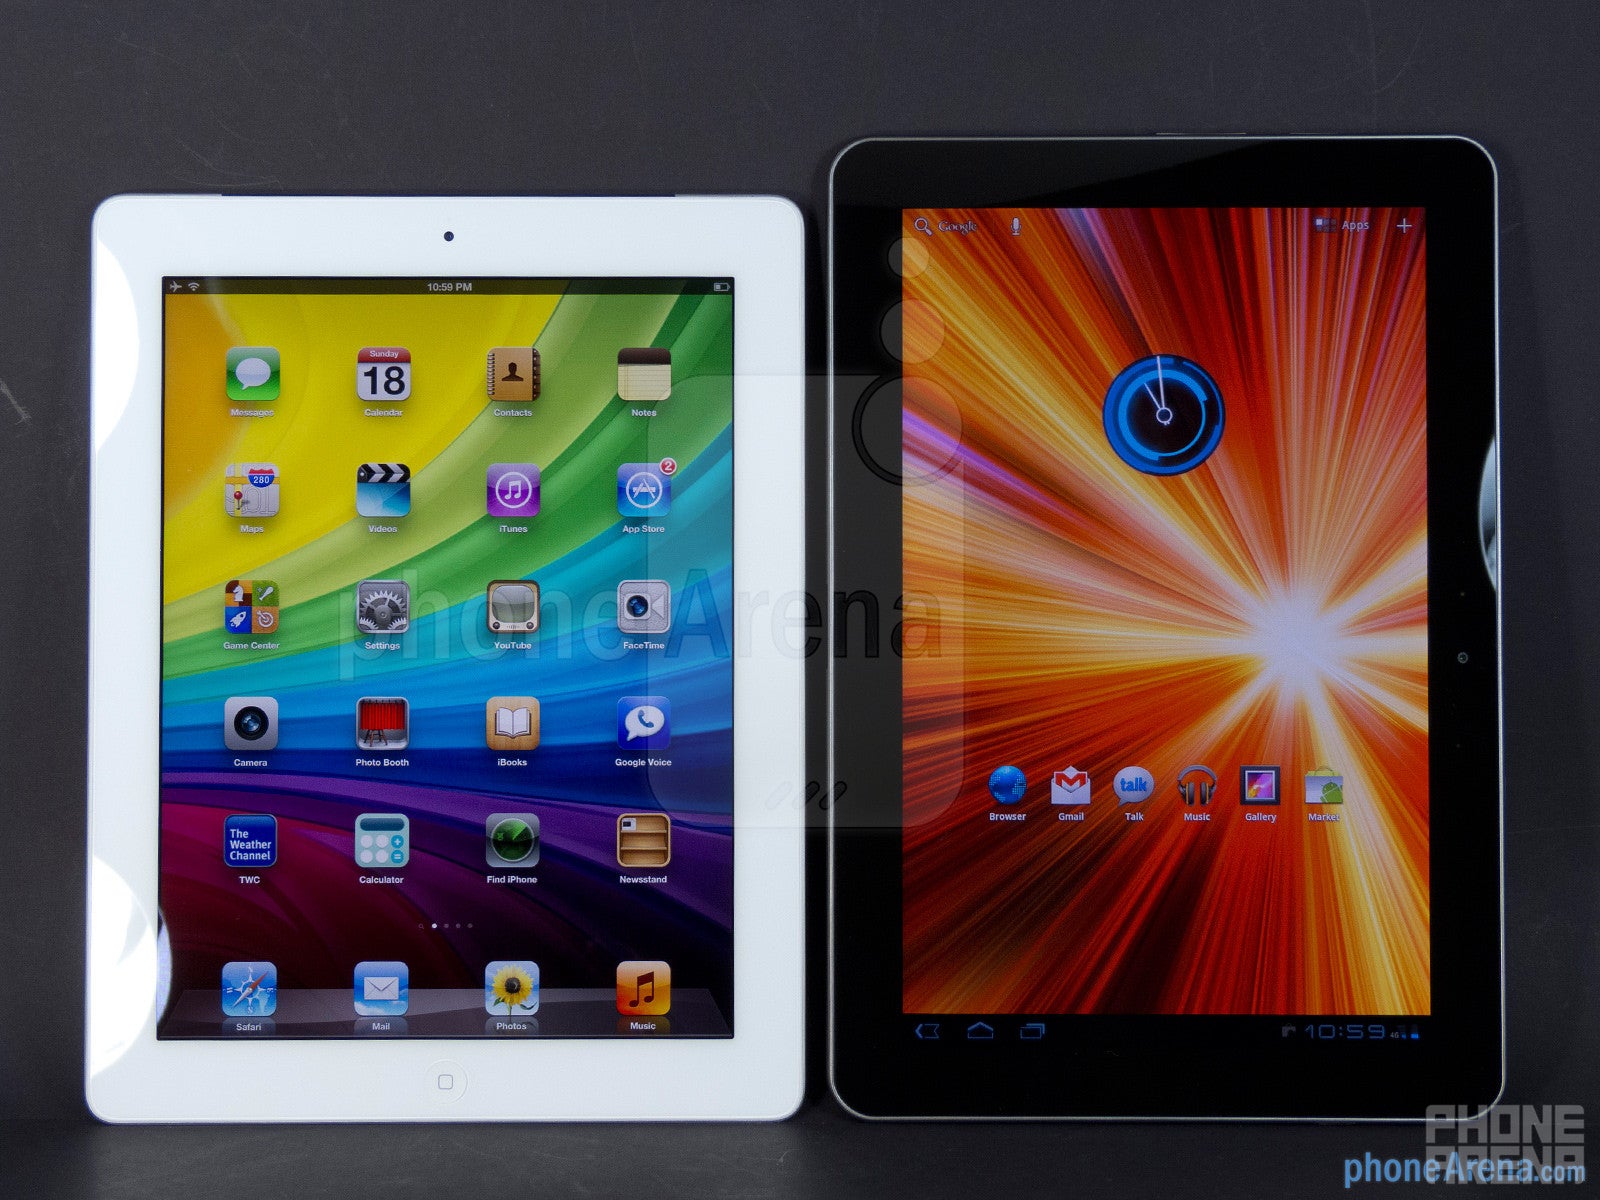 Apple iPad 3 vs Samsung Galaxy Tab 10.1